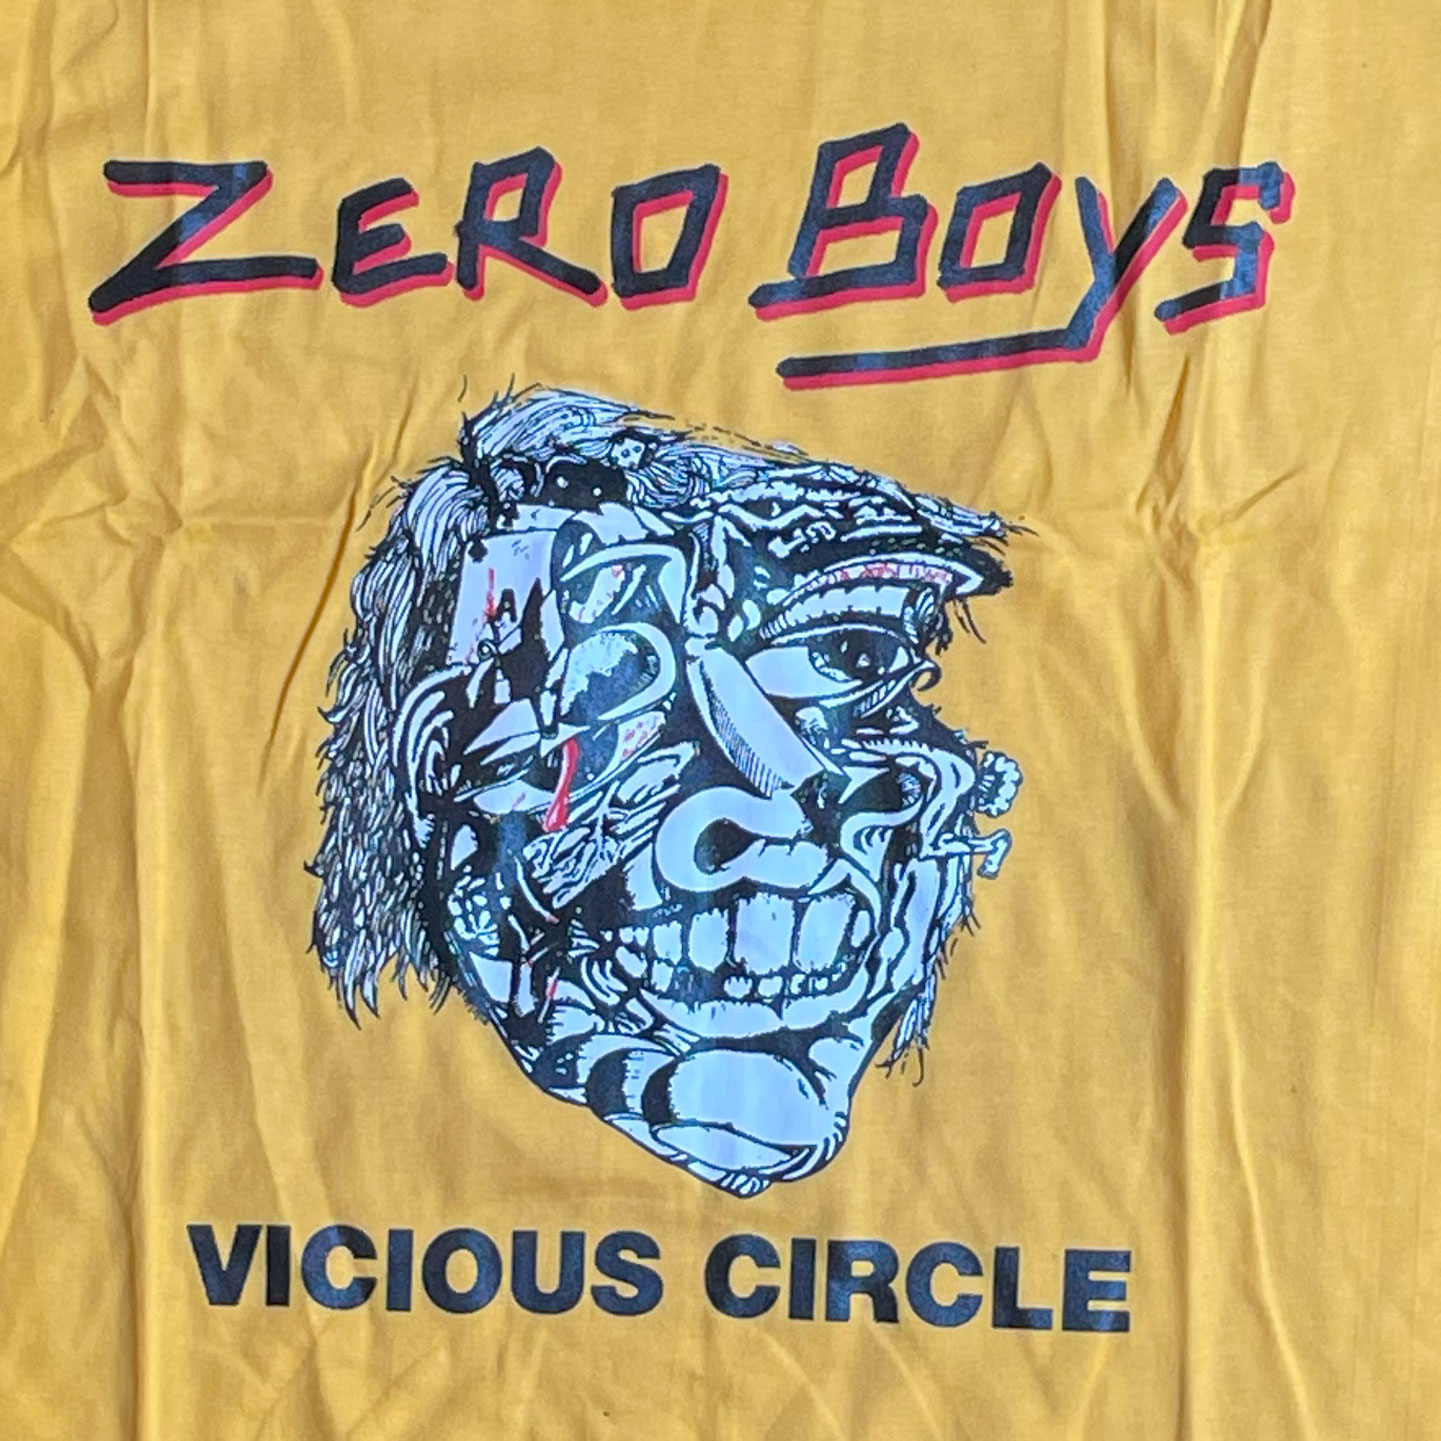 ZERO BOYS Tシャツ VICIOUS CIRCLE